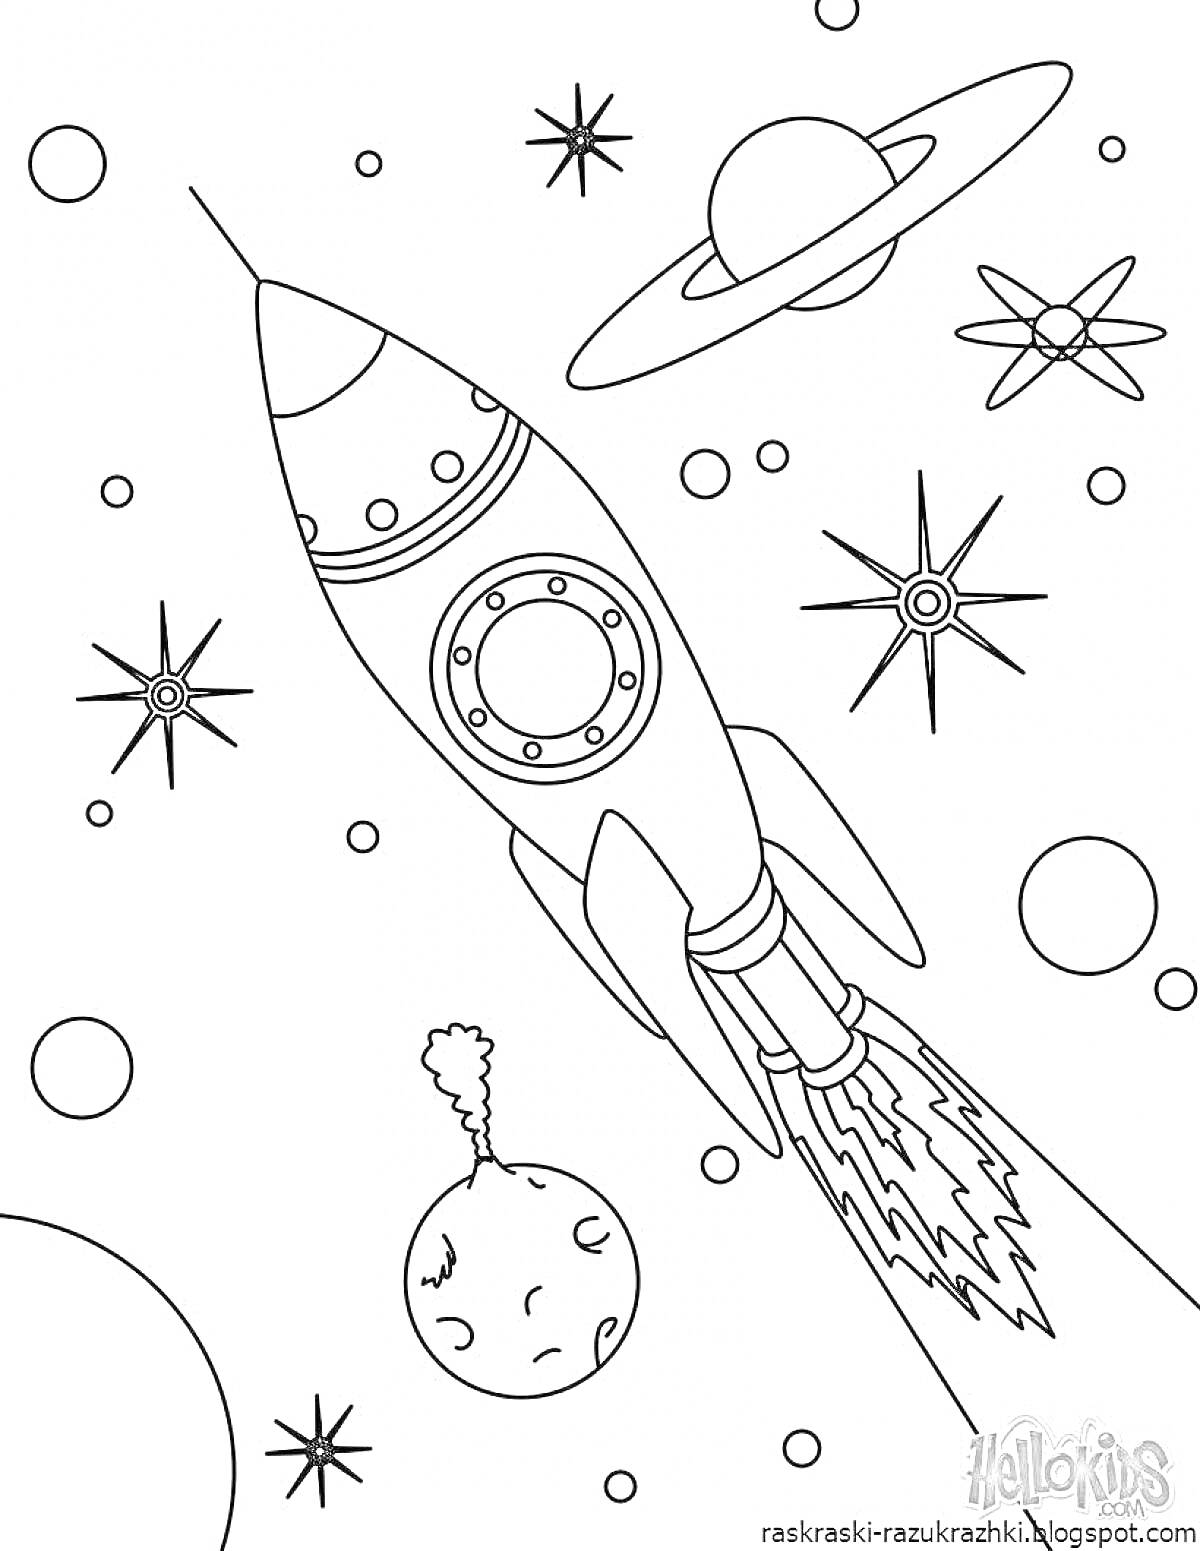 На раскраске изображено: Ракета, Космос, Астронавтика, Планеты, Звезды, Комета, Для детей